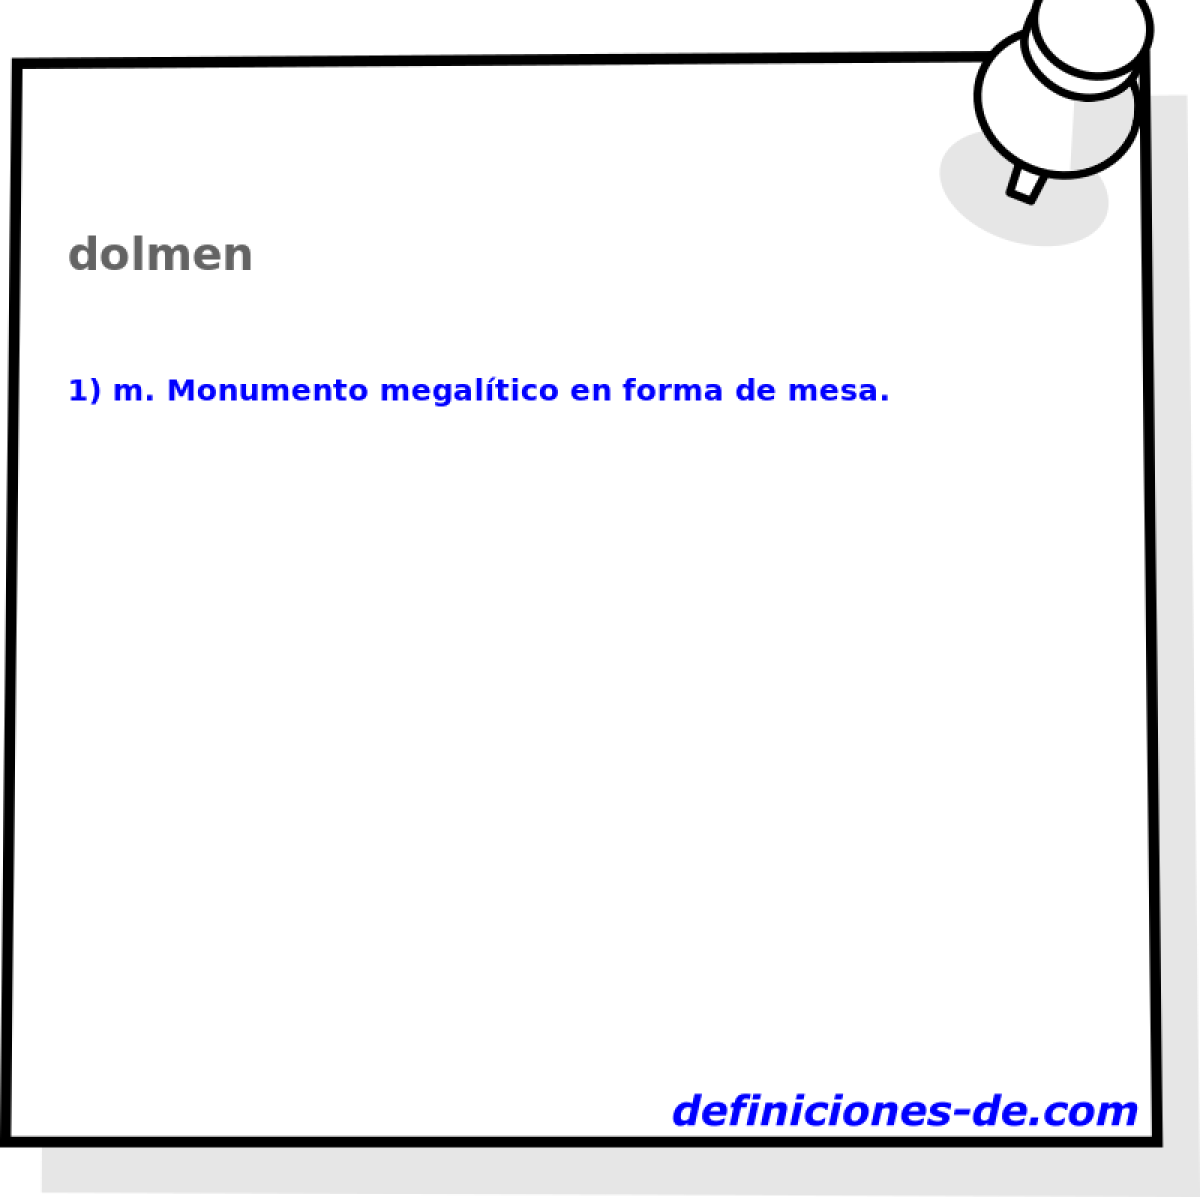 dolmen 